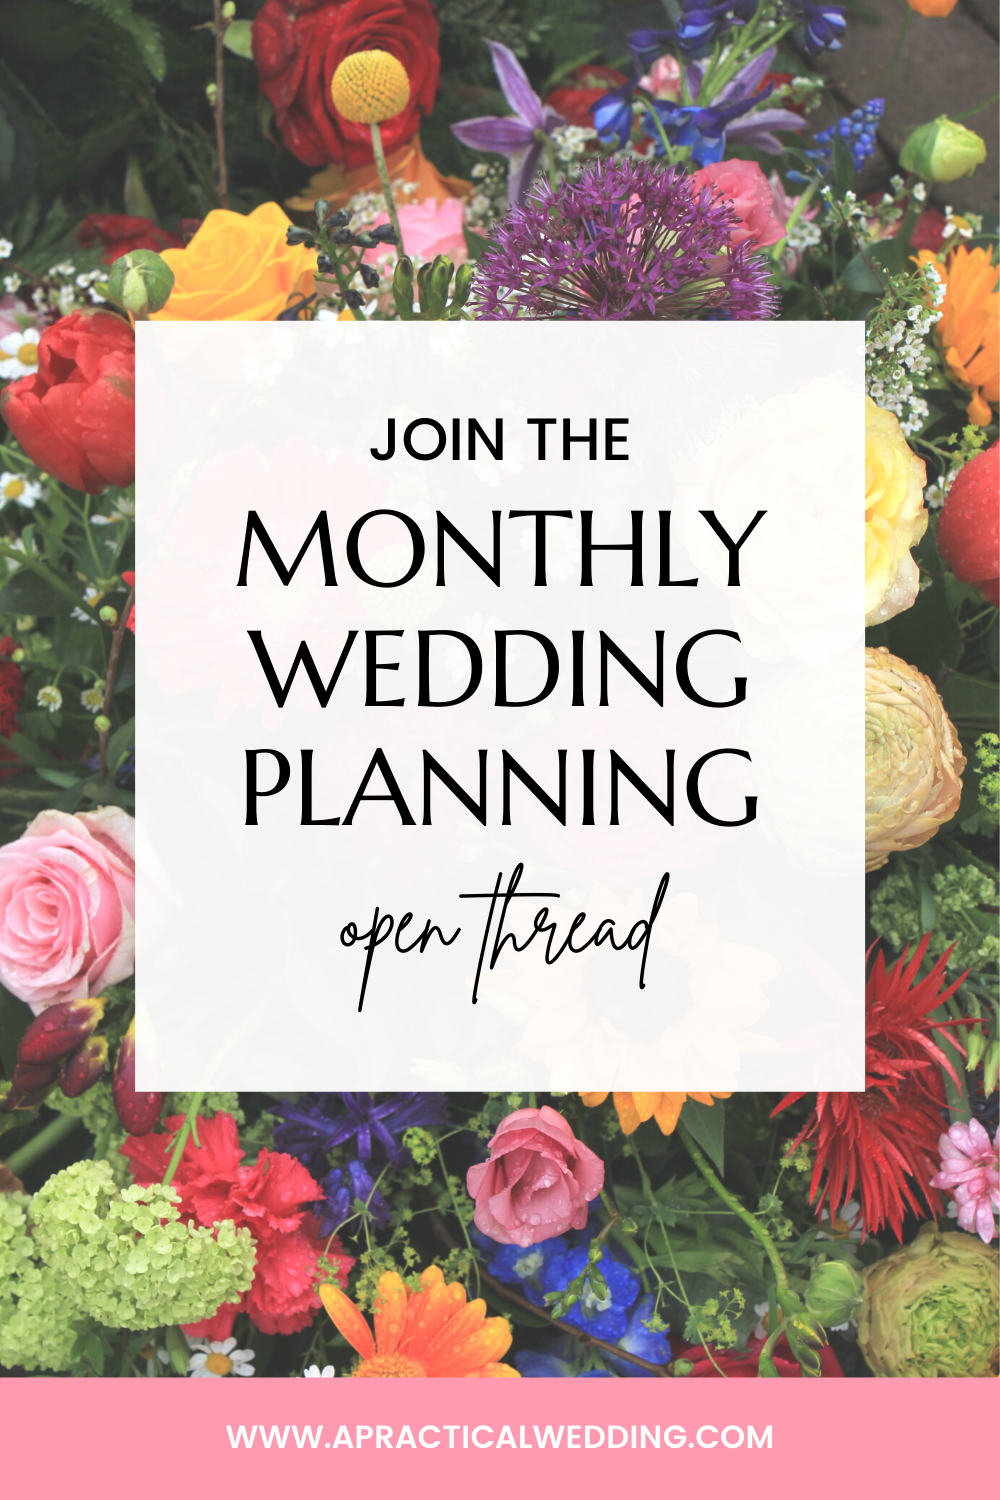 March 2022 Wedding Planing Open Thread